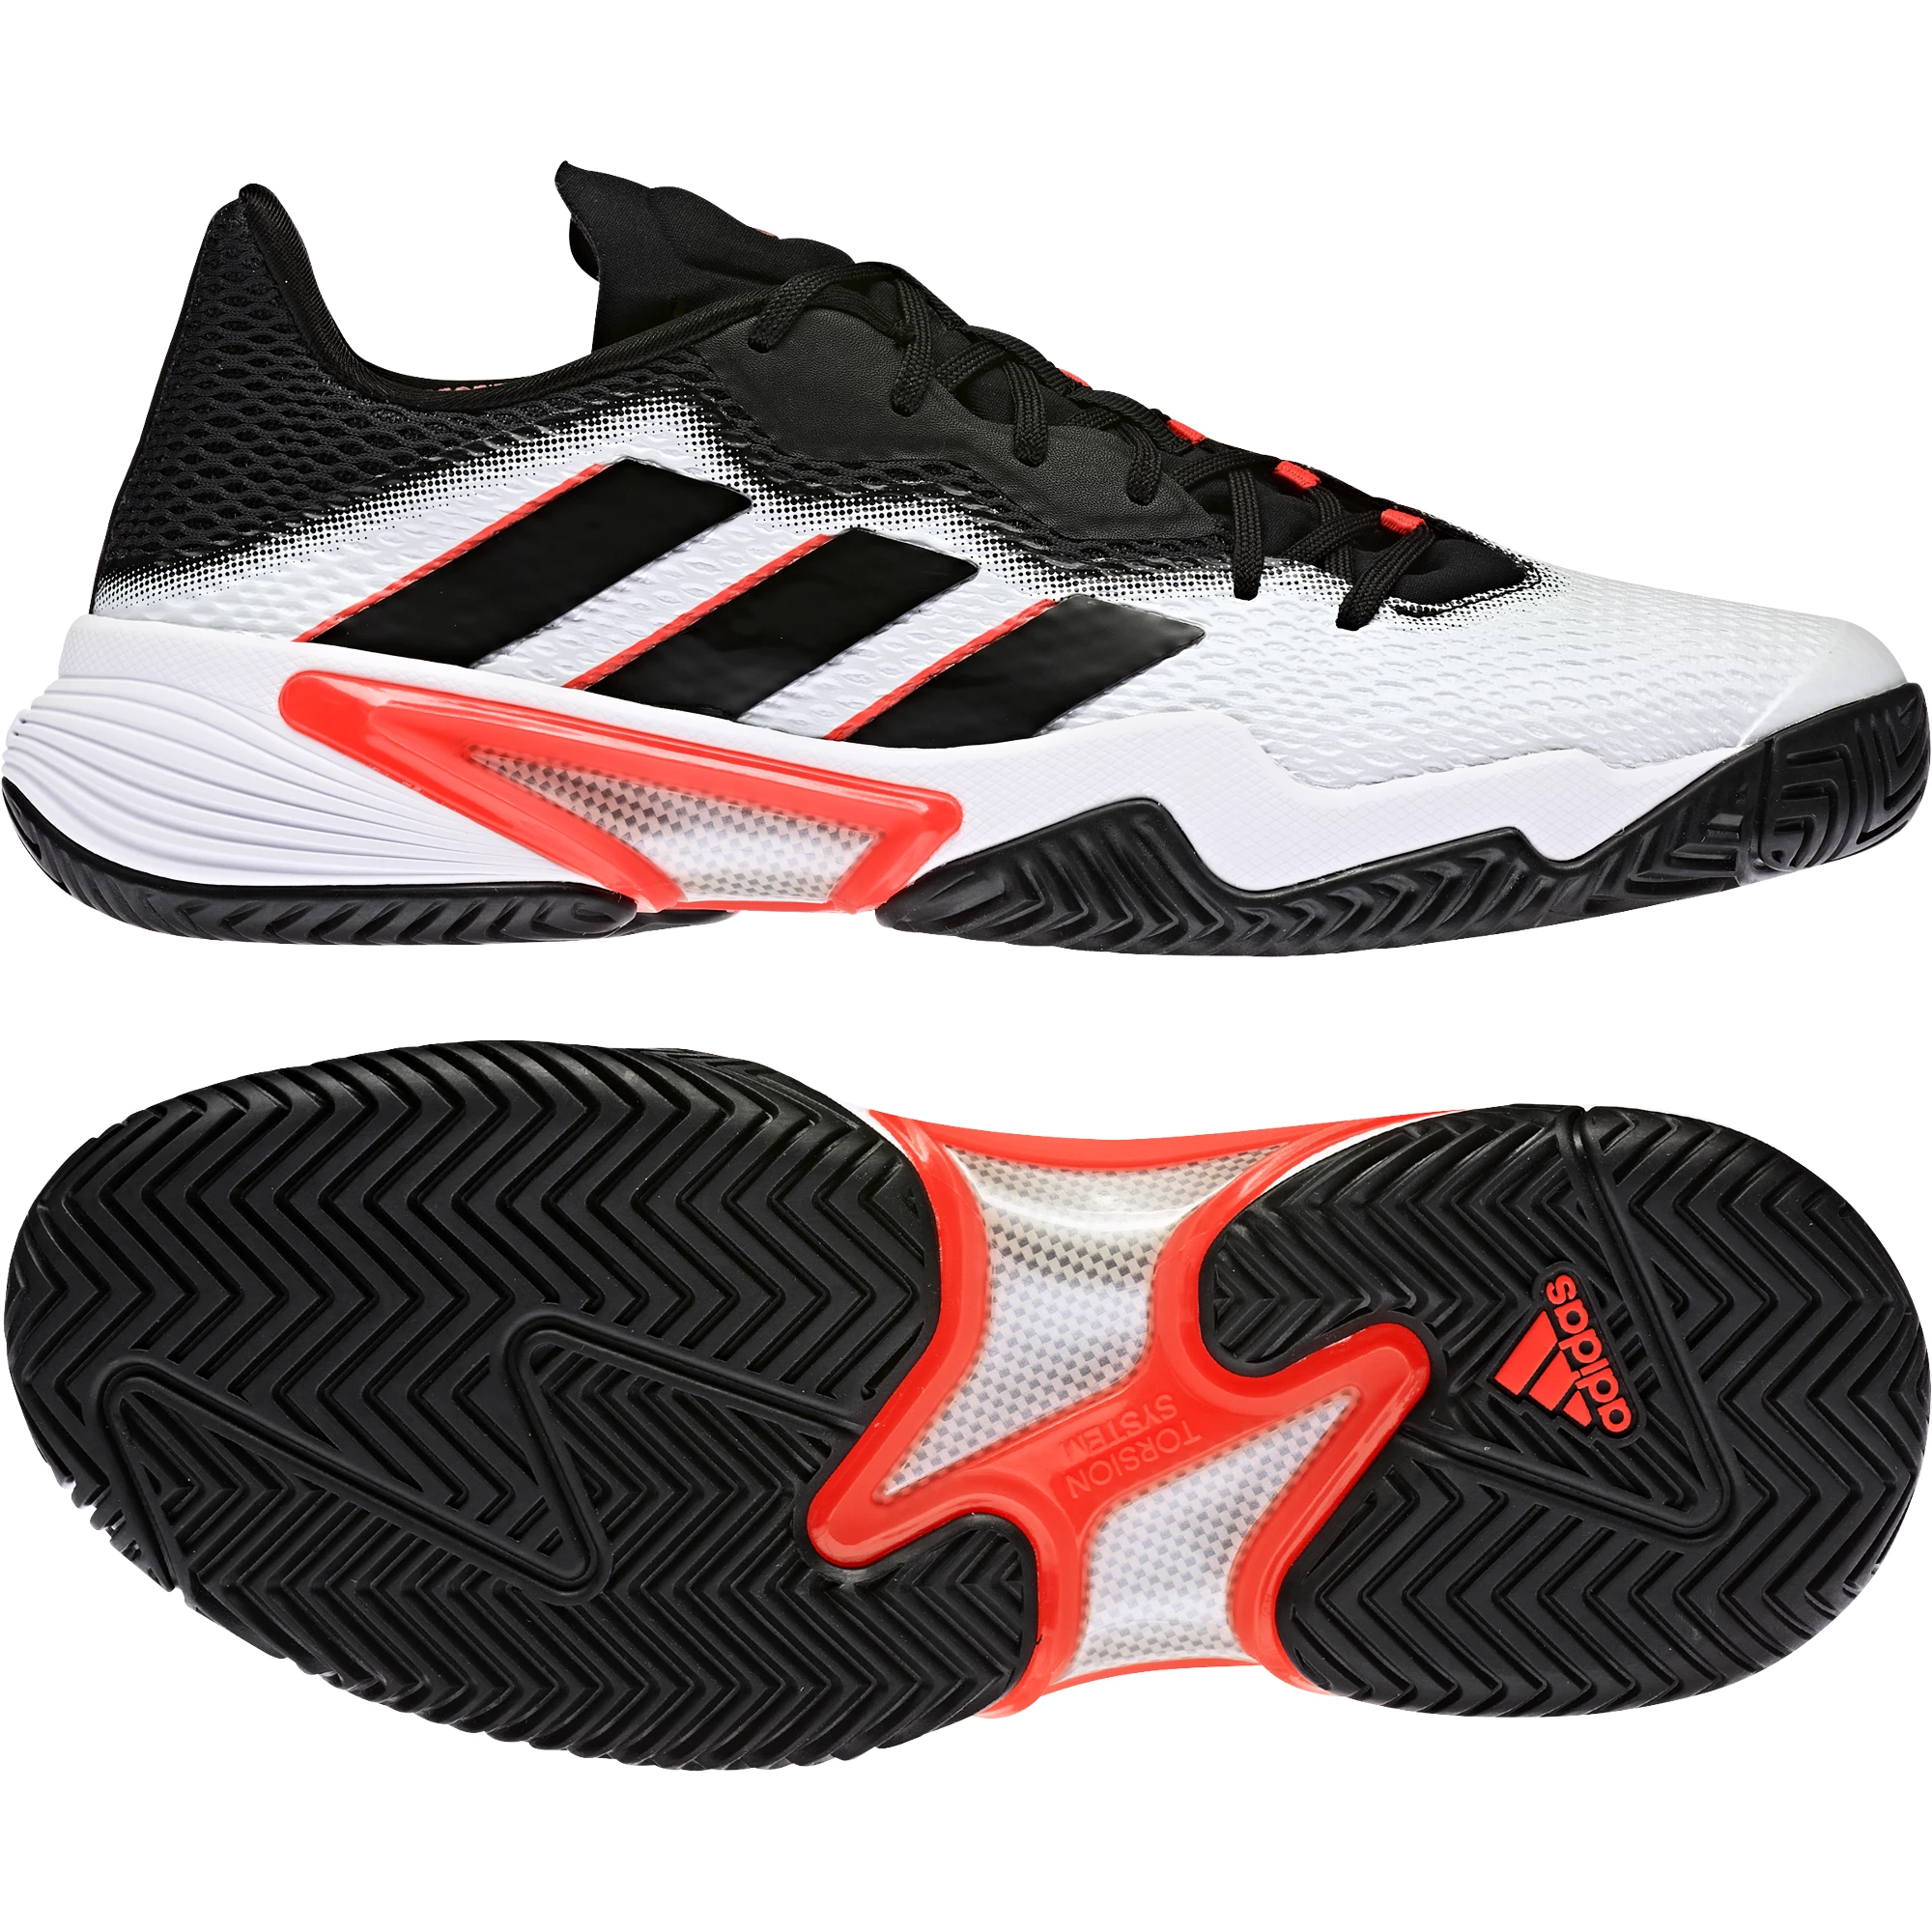 Men's Tennis Shoes adidas Barricade M White/Black EUR 42